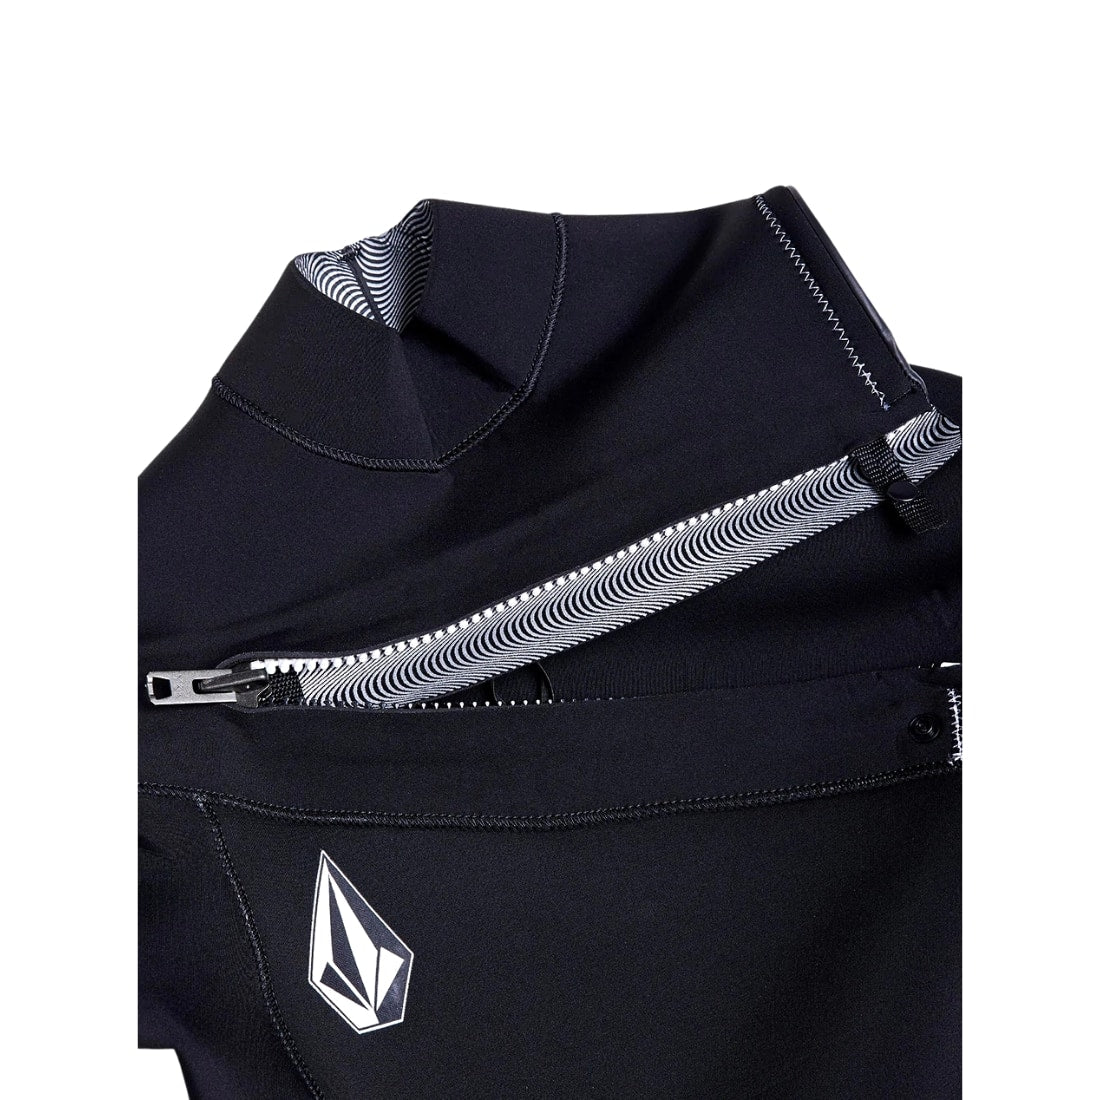 Volcom 4/3mm Modulator Chest Zip Wetsuit - Black